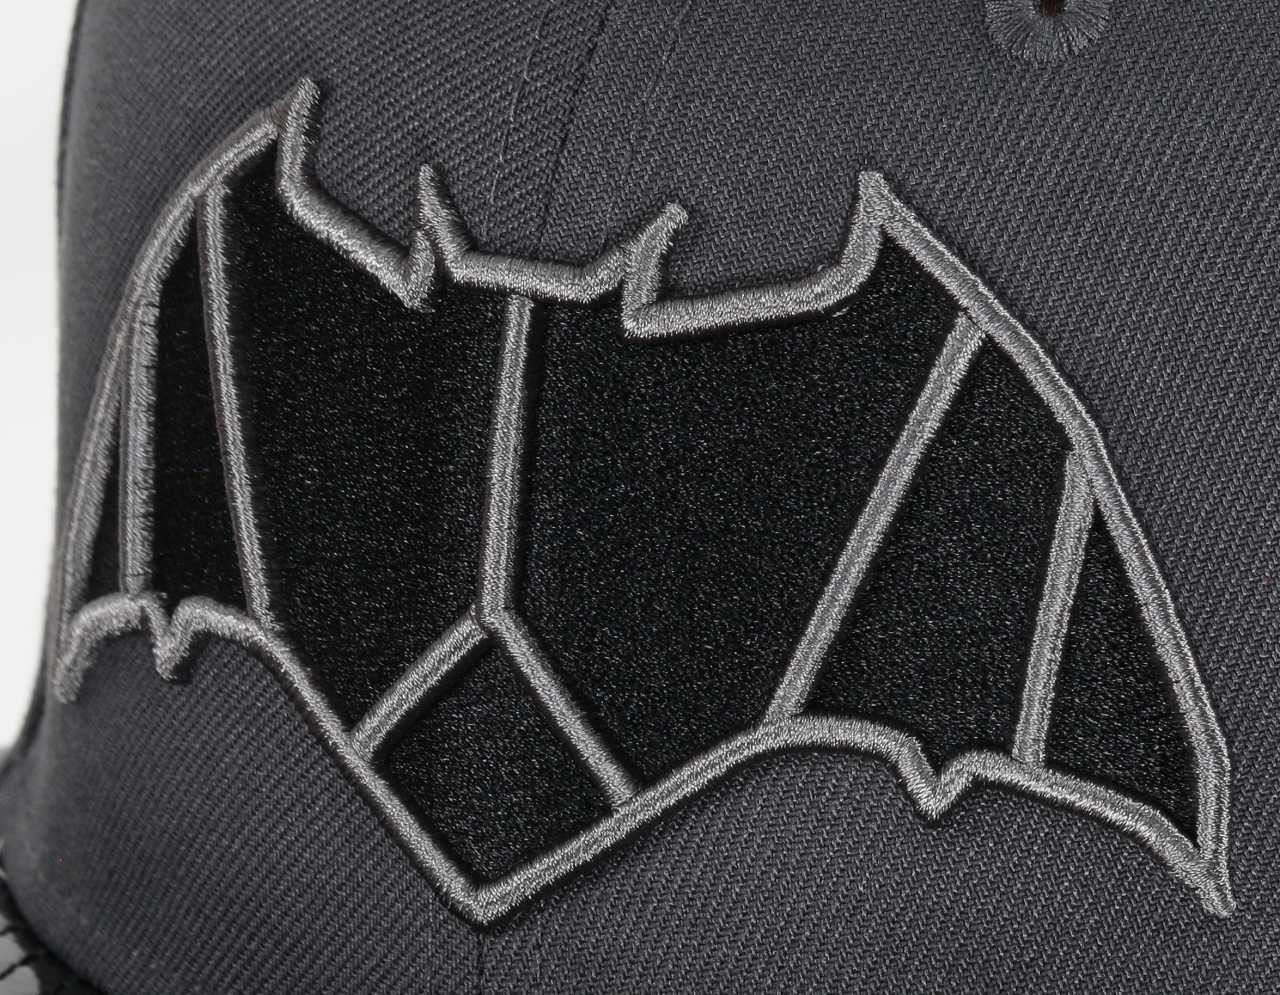 Batman Black Justice League Collection 59Fifty Basecap New Era 